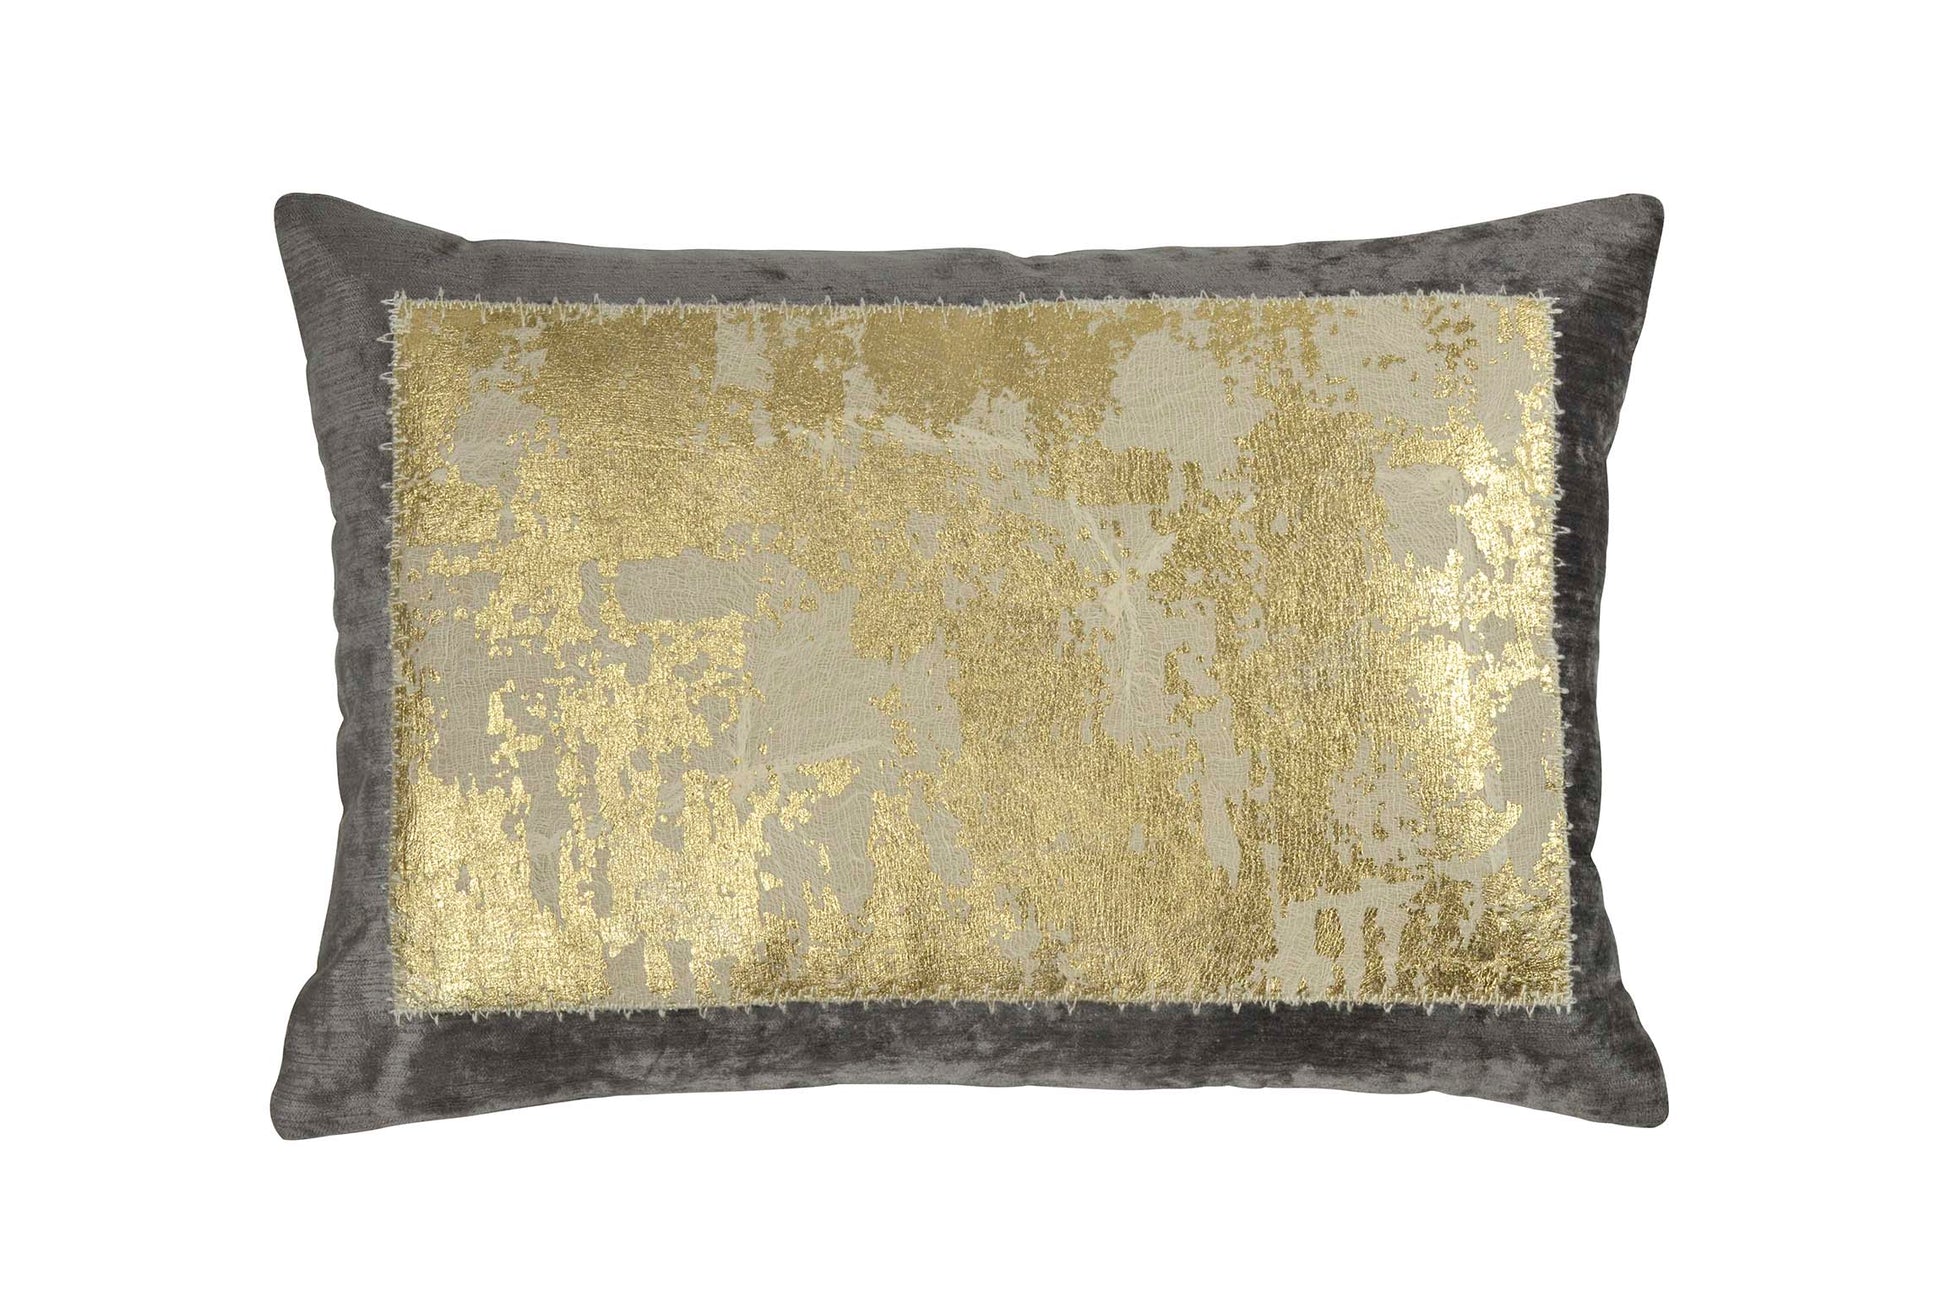 Michael Aram Distressed Metallic Lace Decorative Pillow